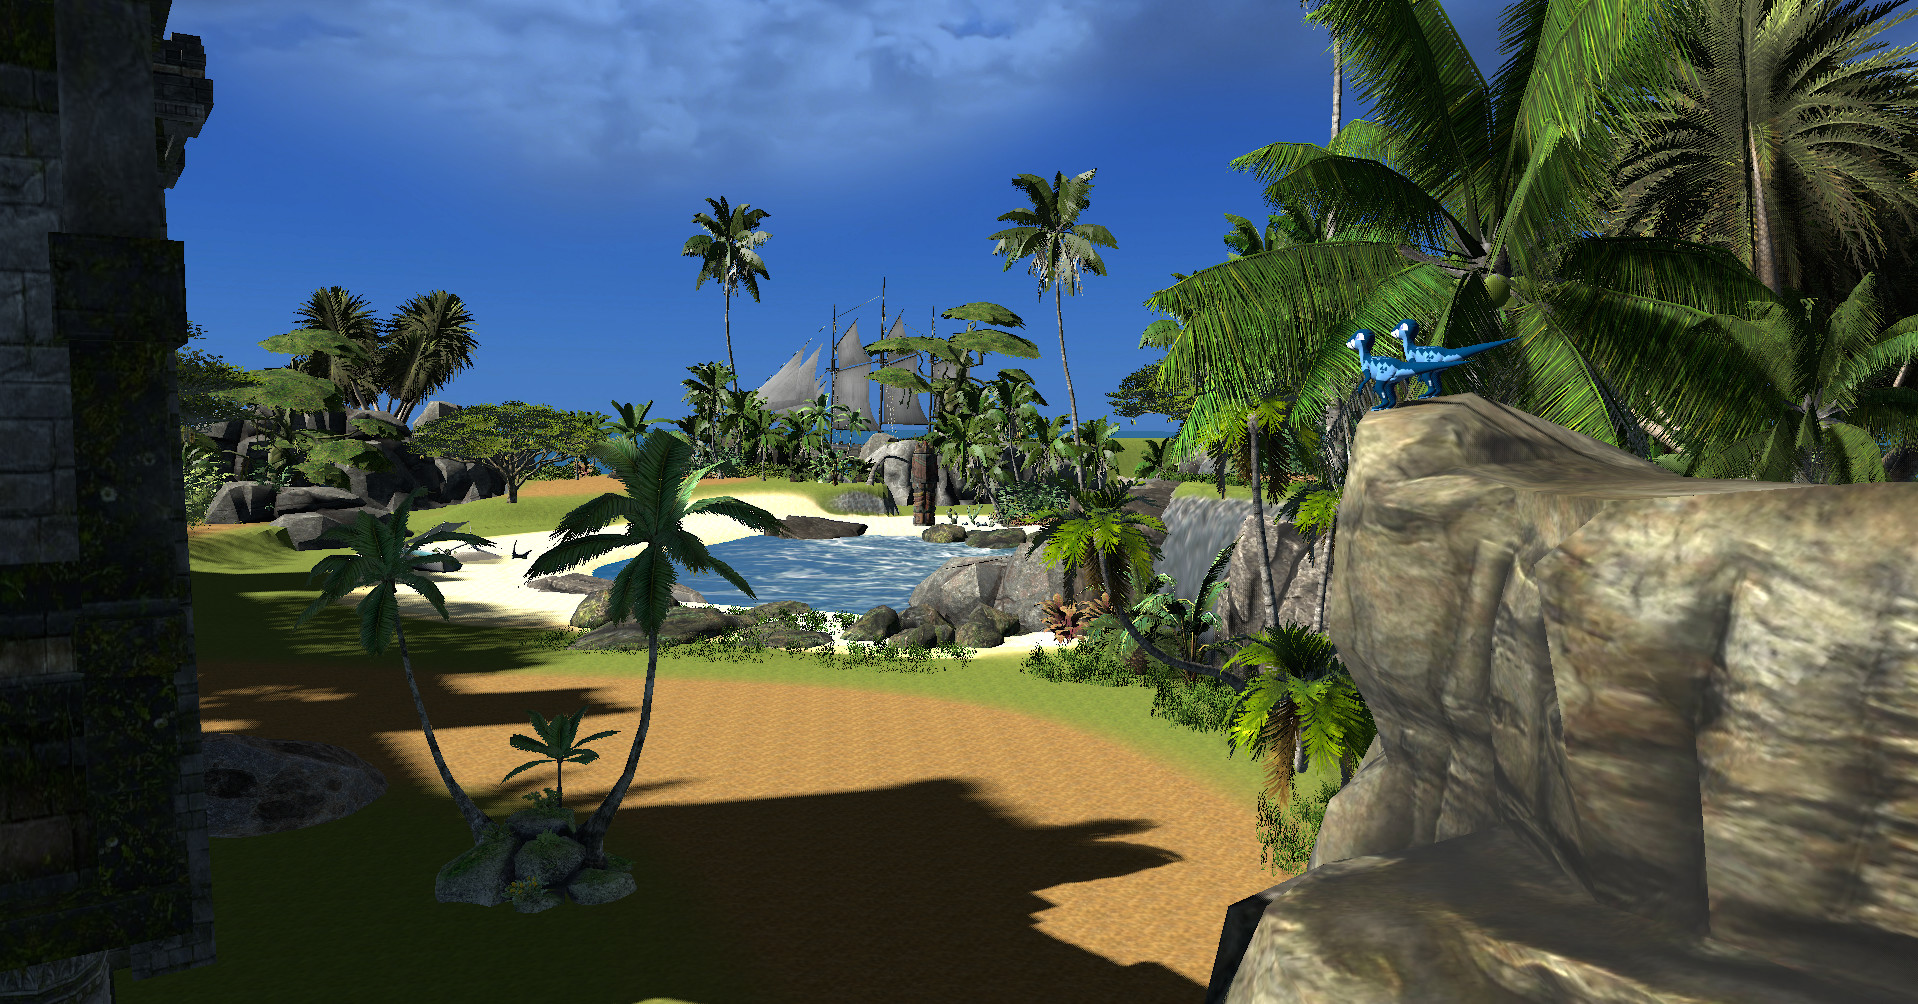 Pooltoys exploring a fantasy island